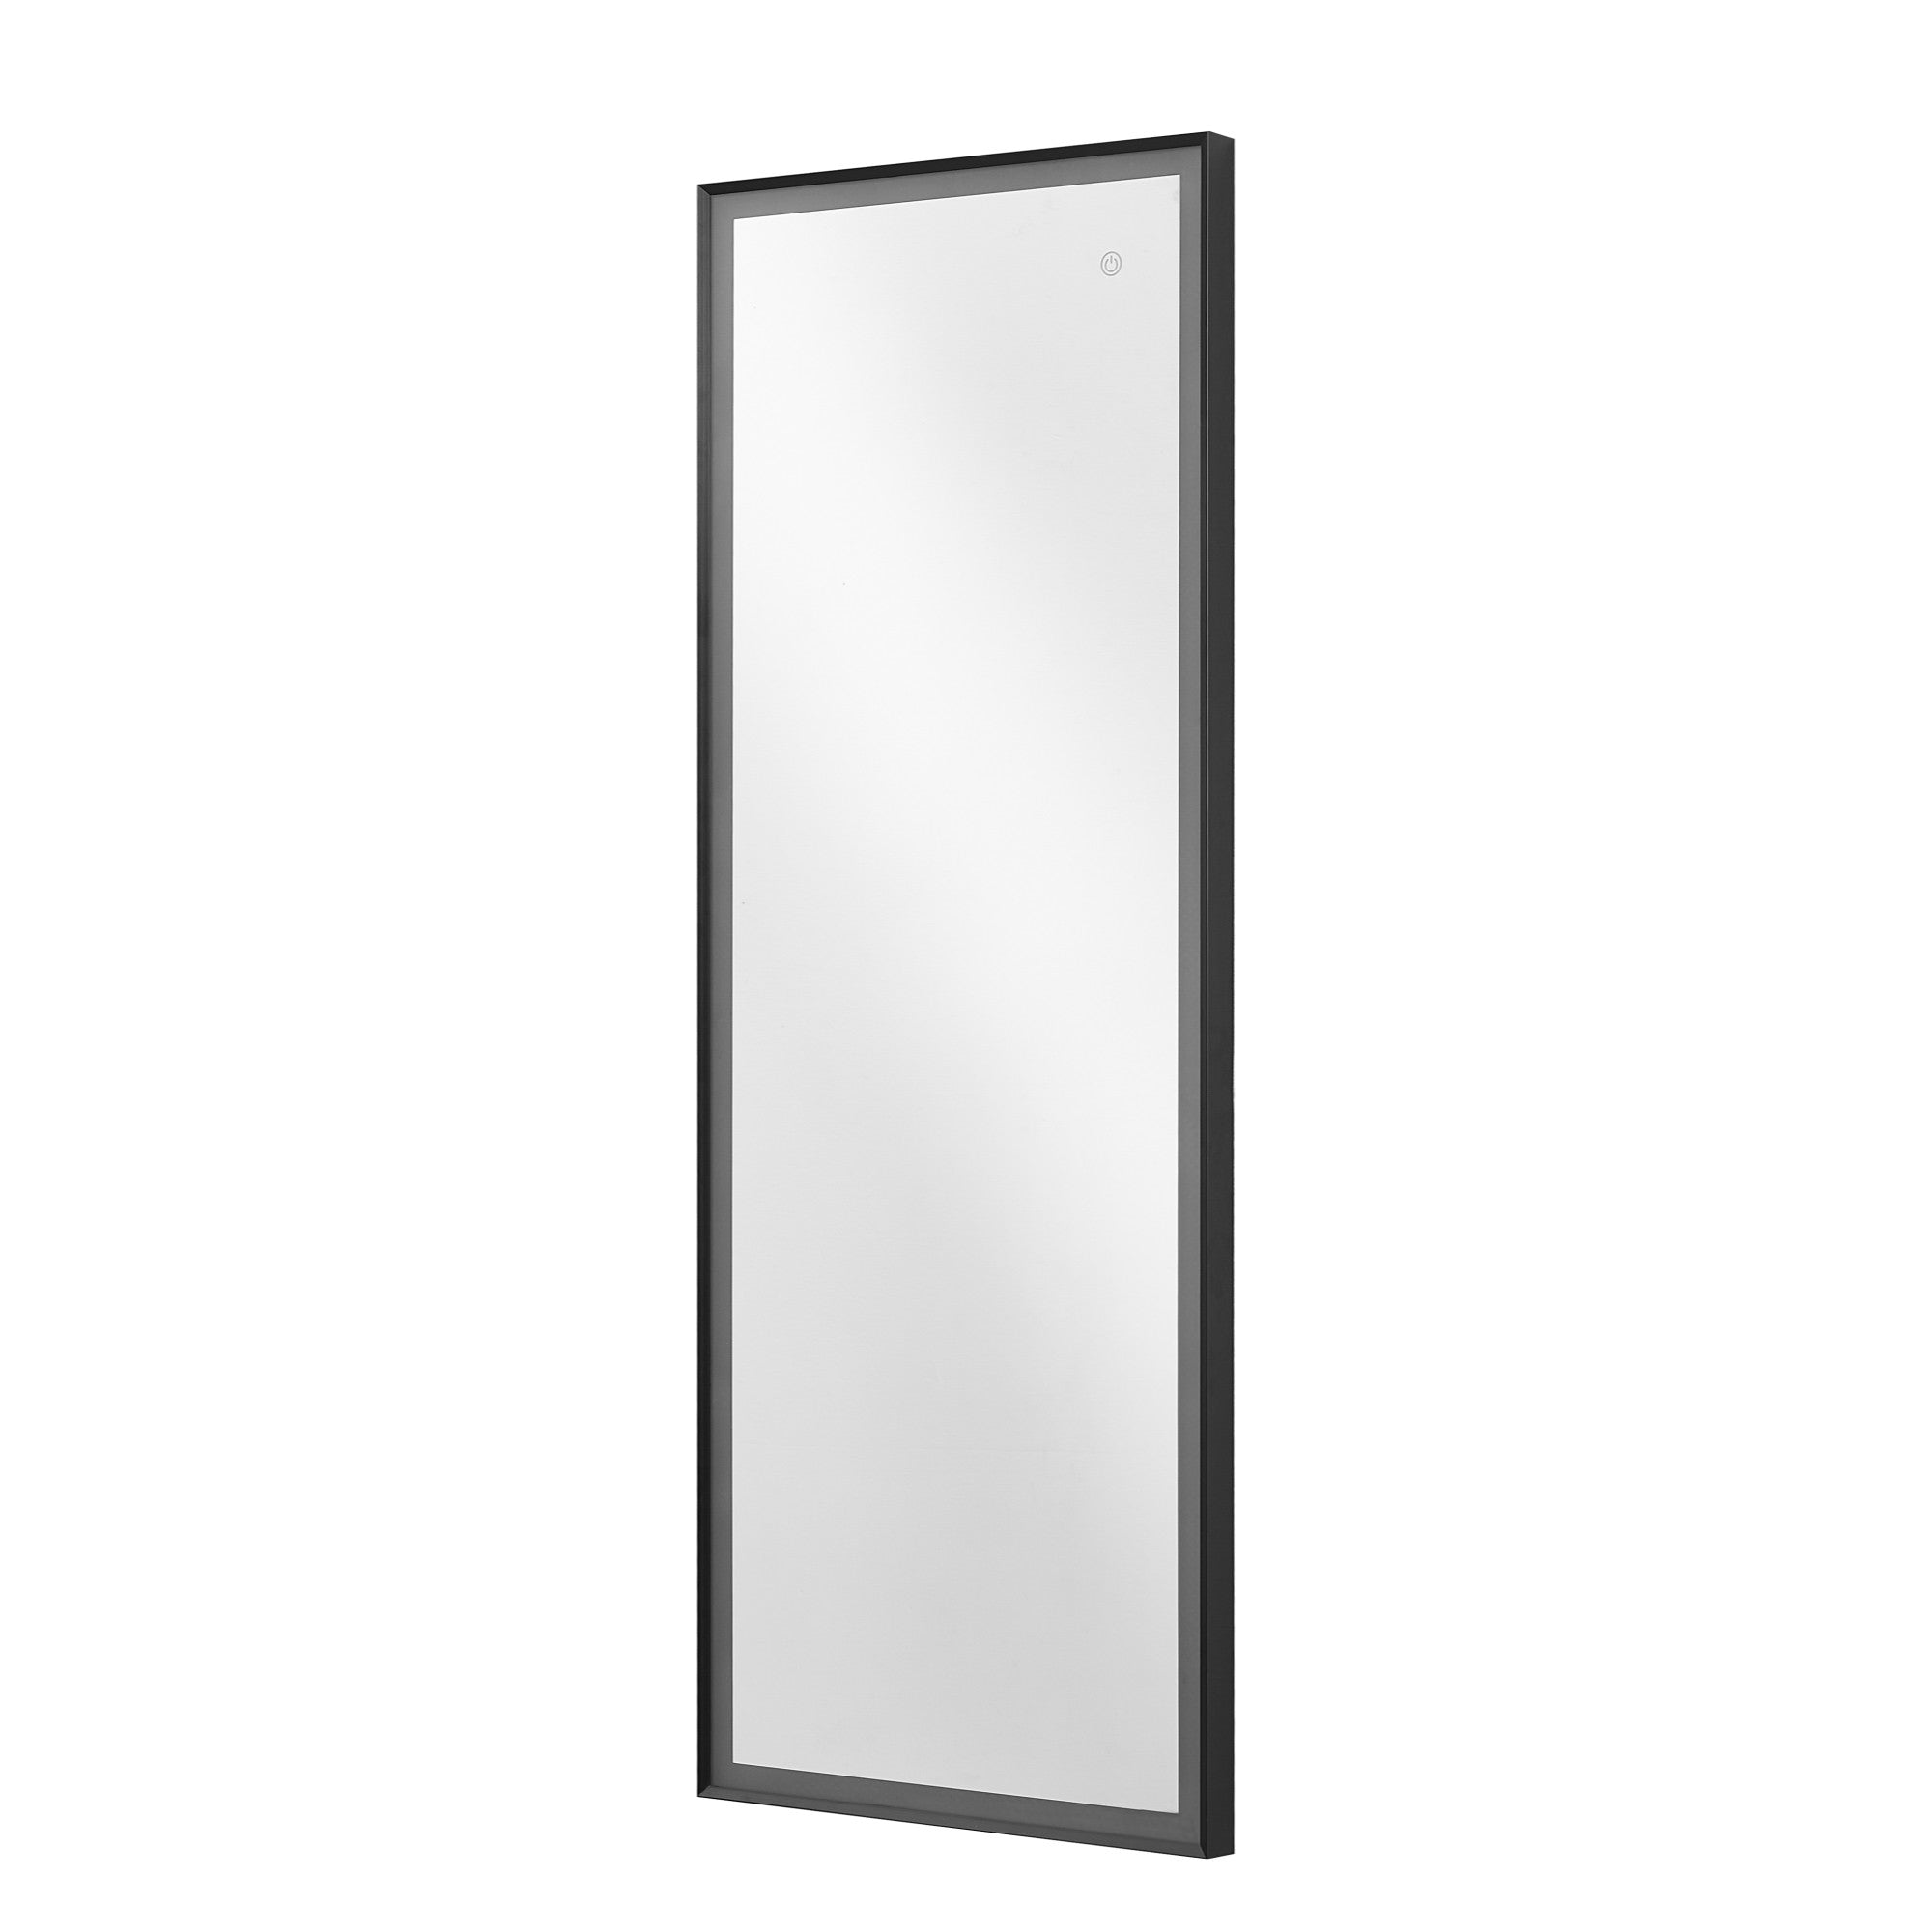 53" Black Lighted Metal Framed Accent Mirror